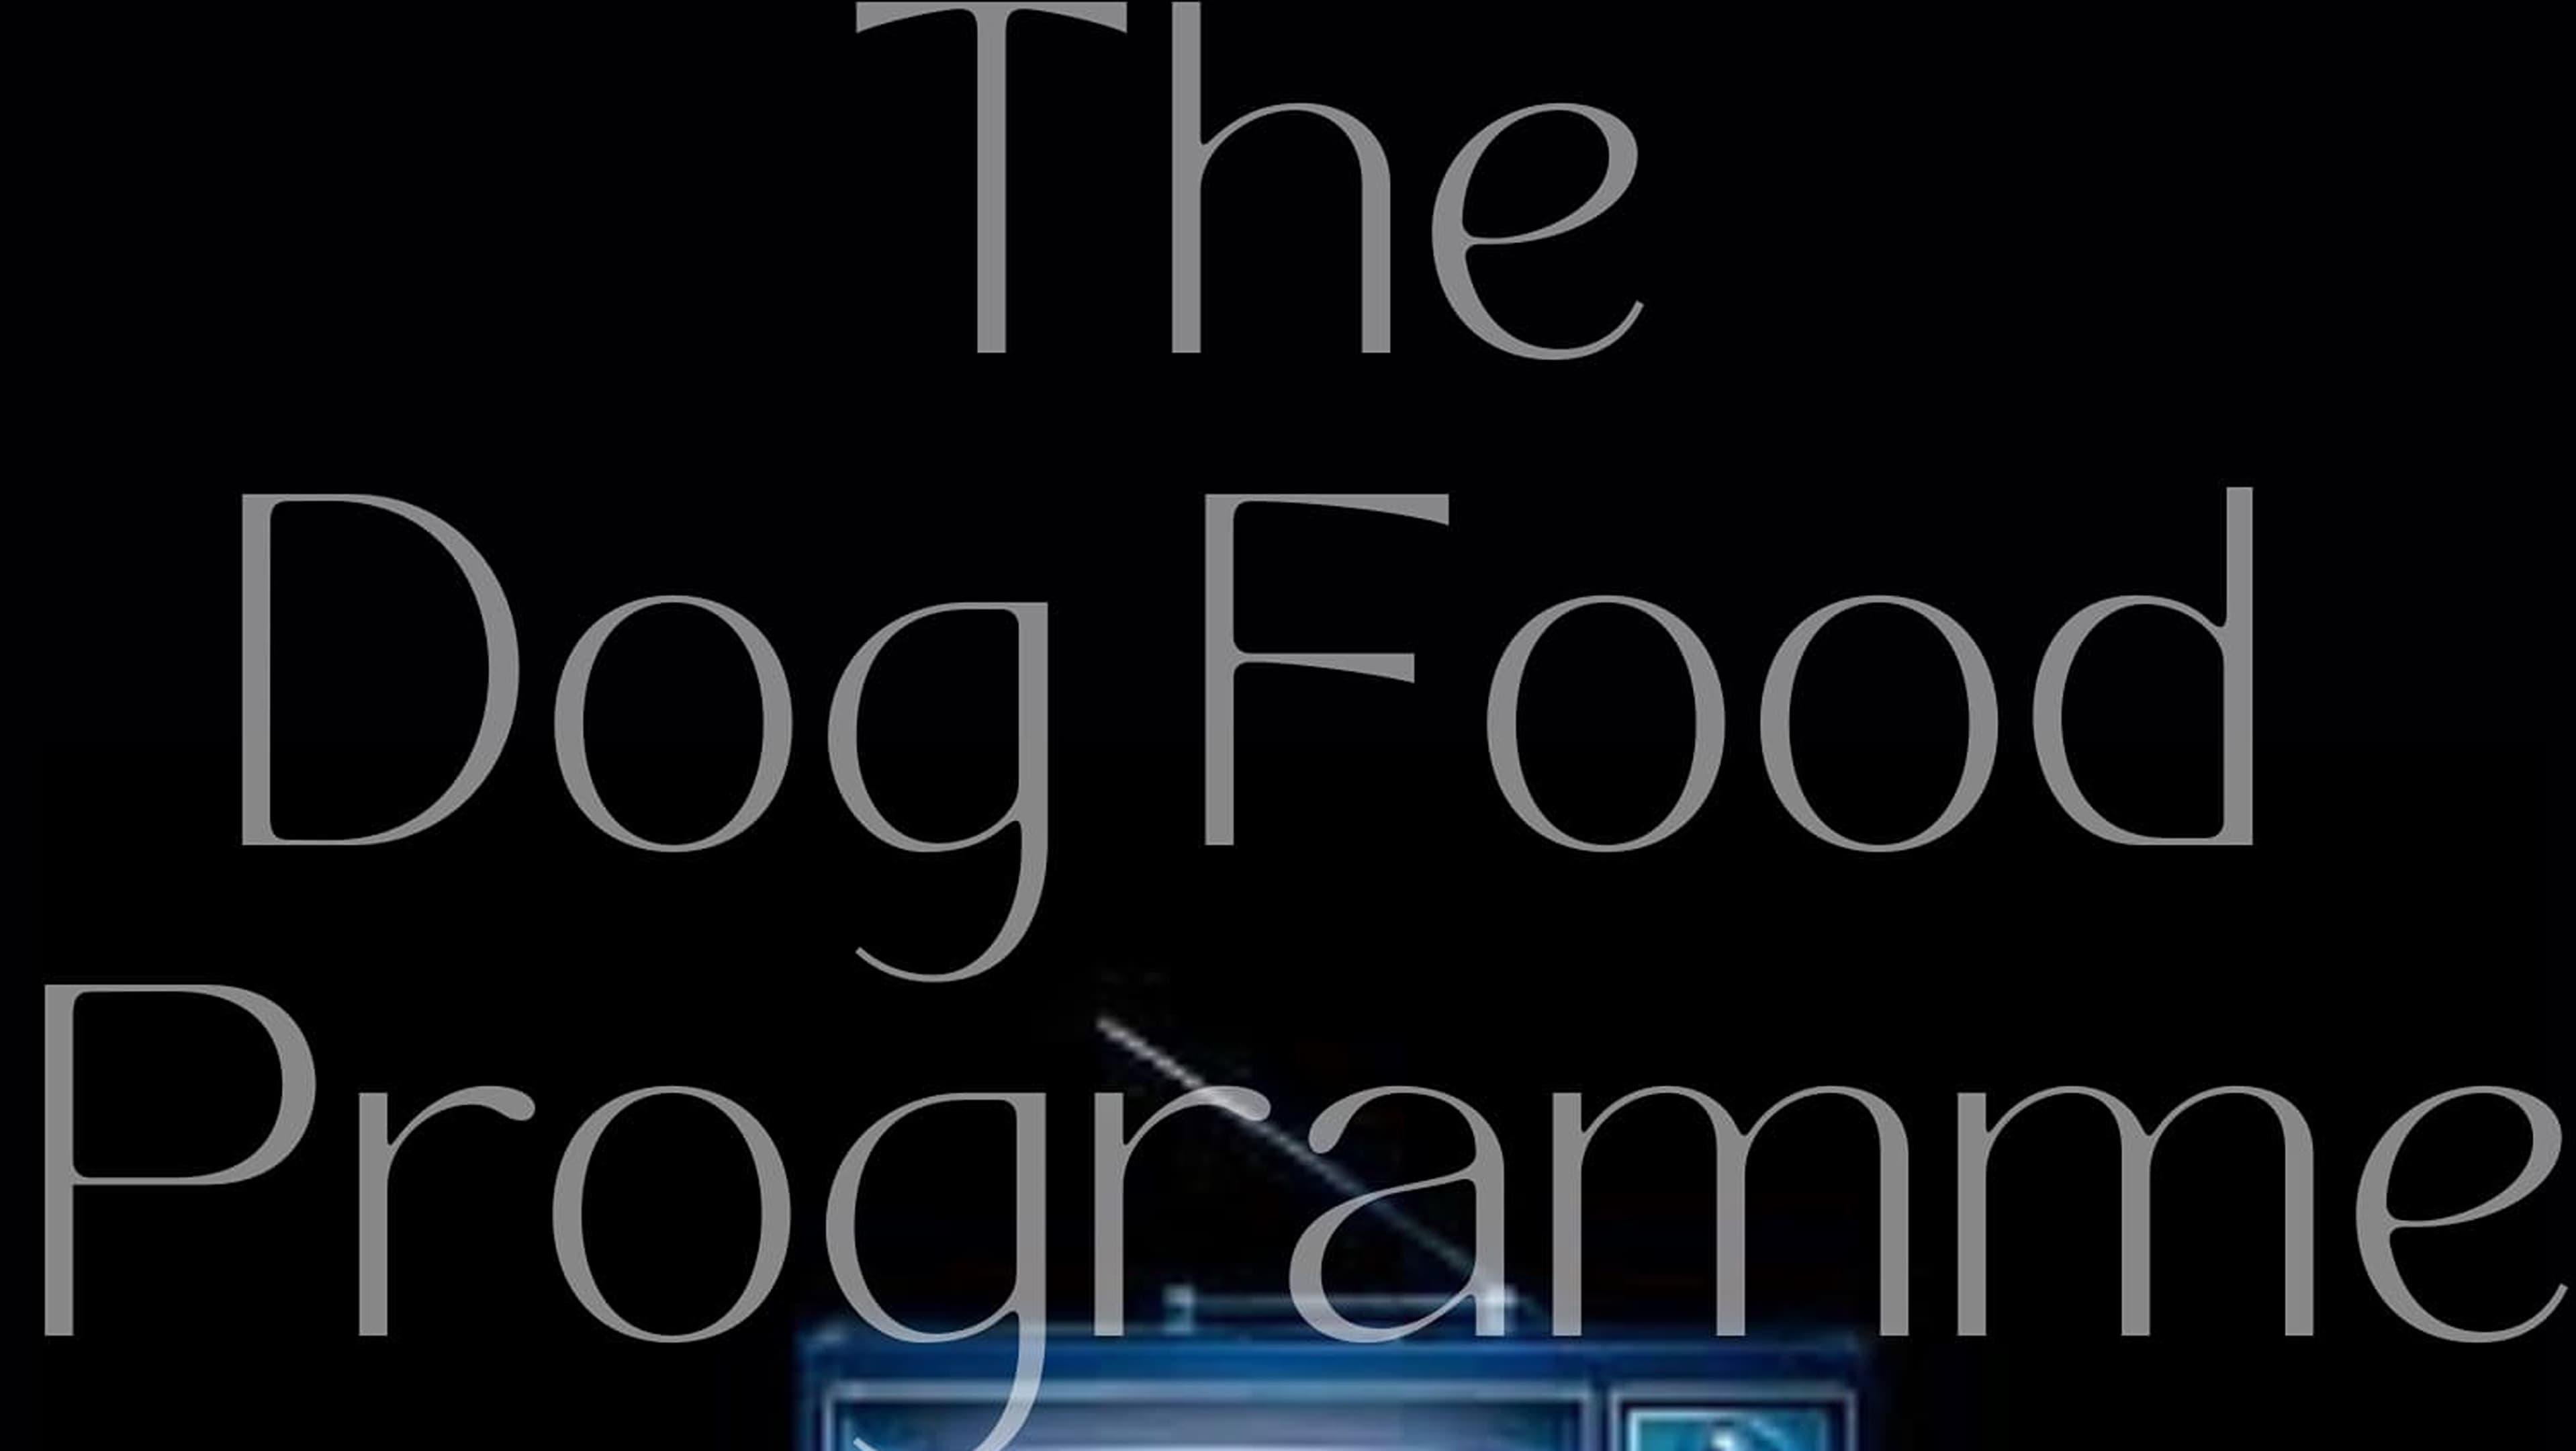 The Dog Food Programme backdrop